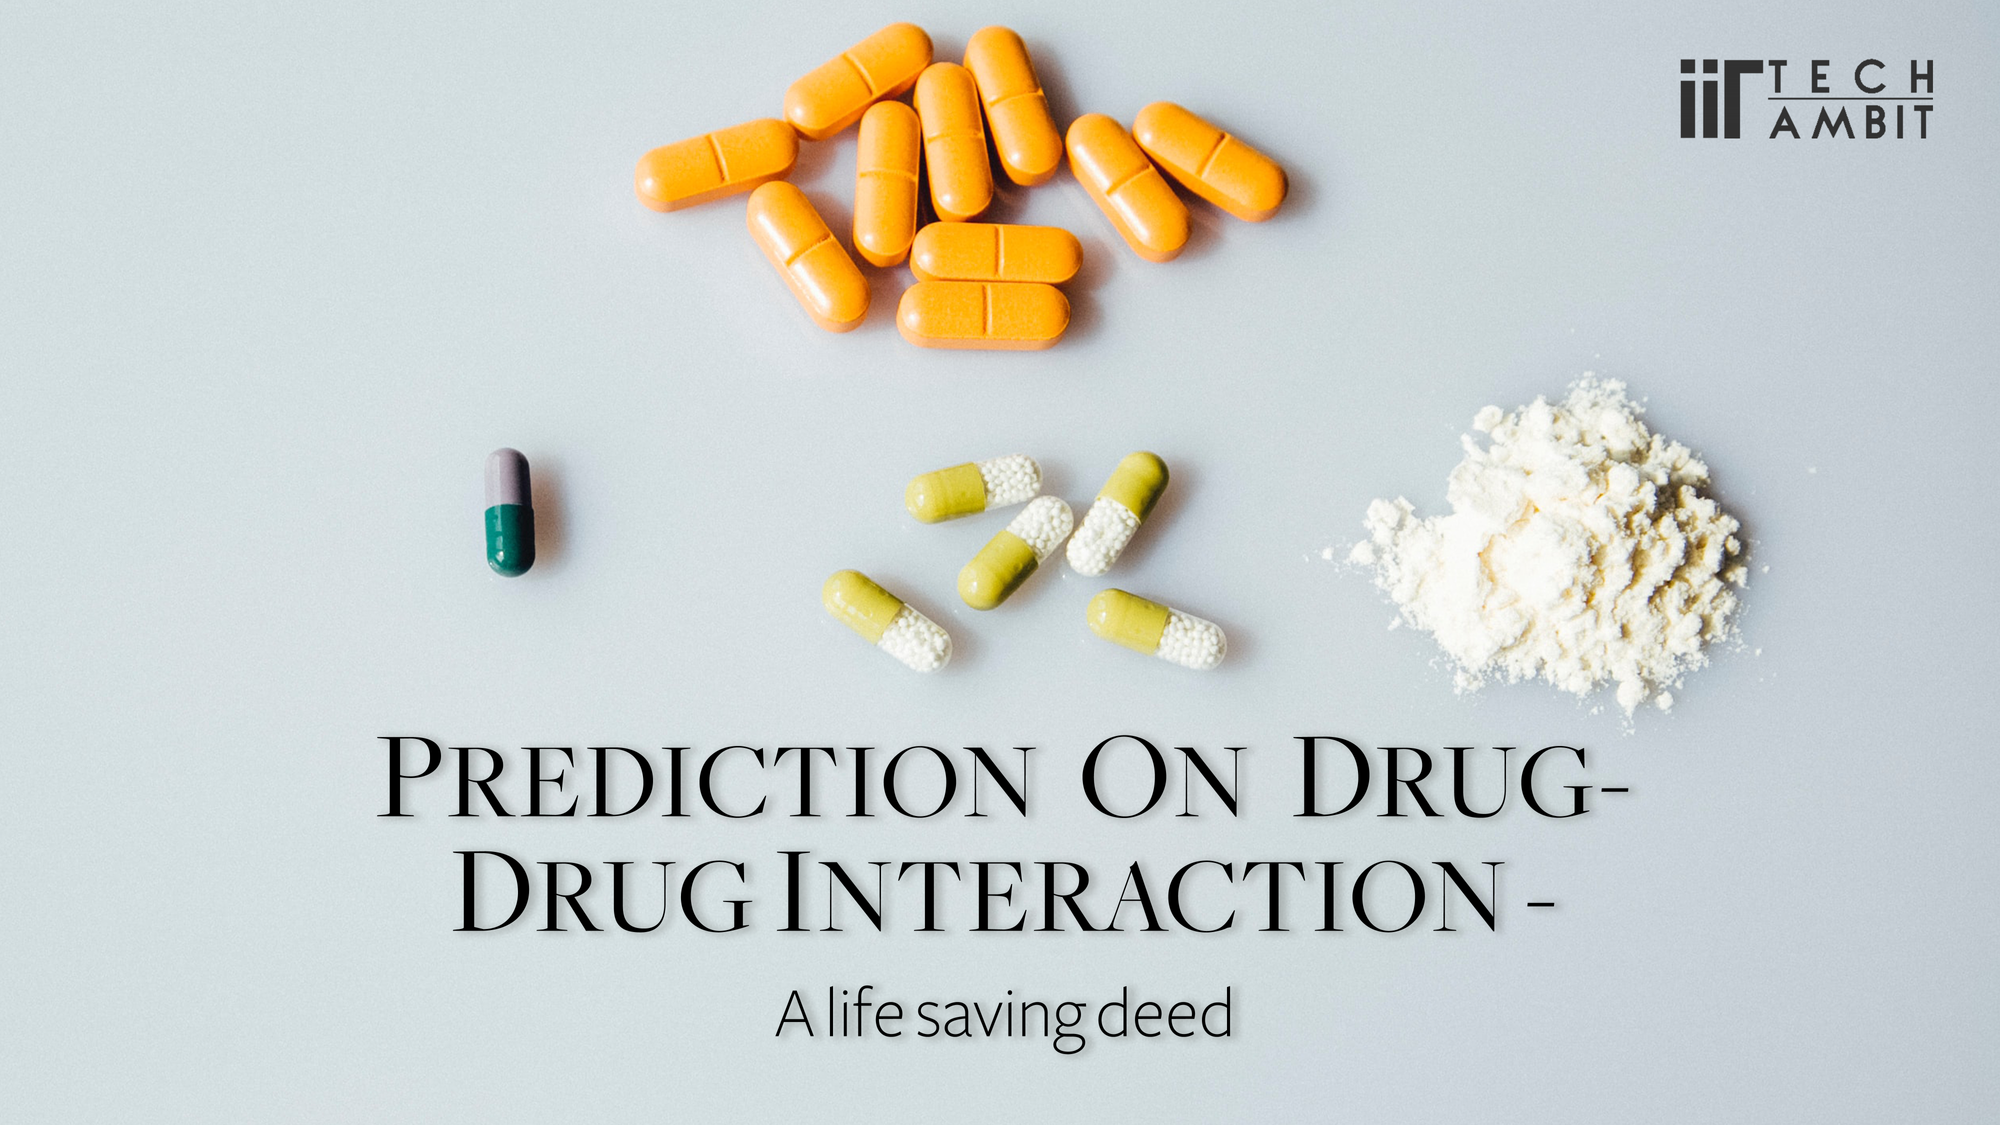 Predictions on drug-drug interaction: A life-saving deed